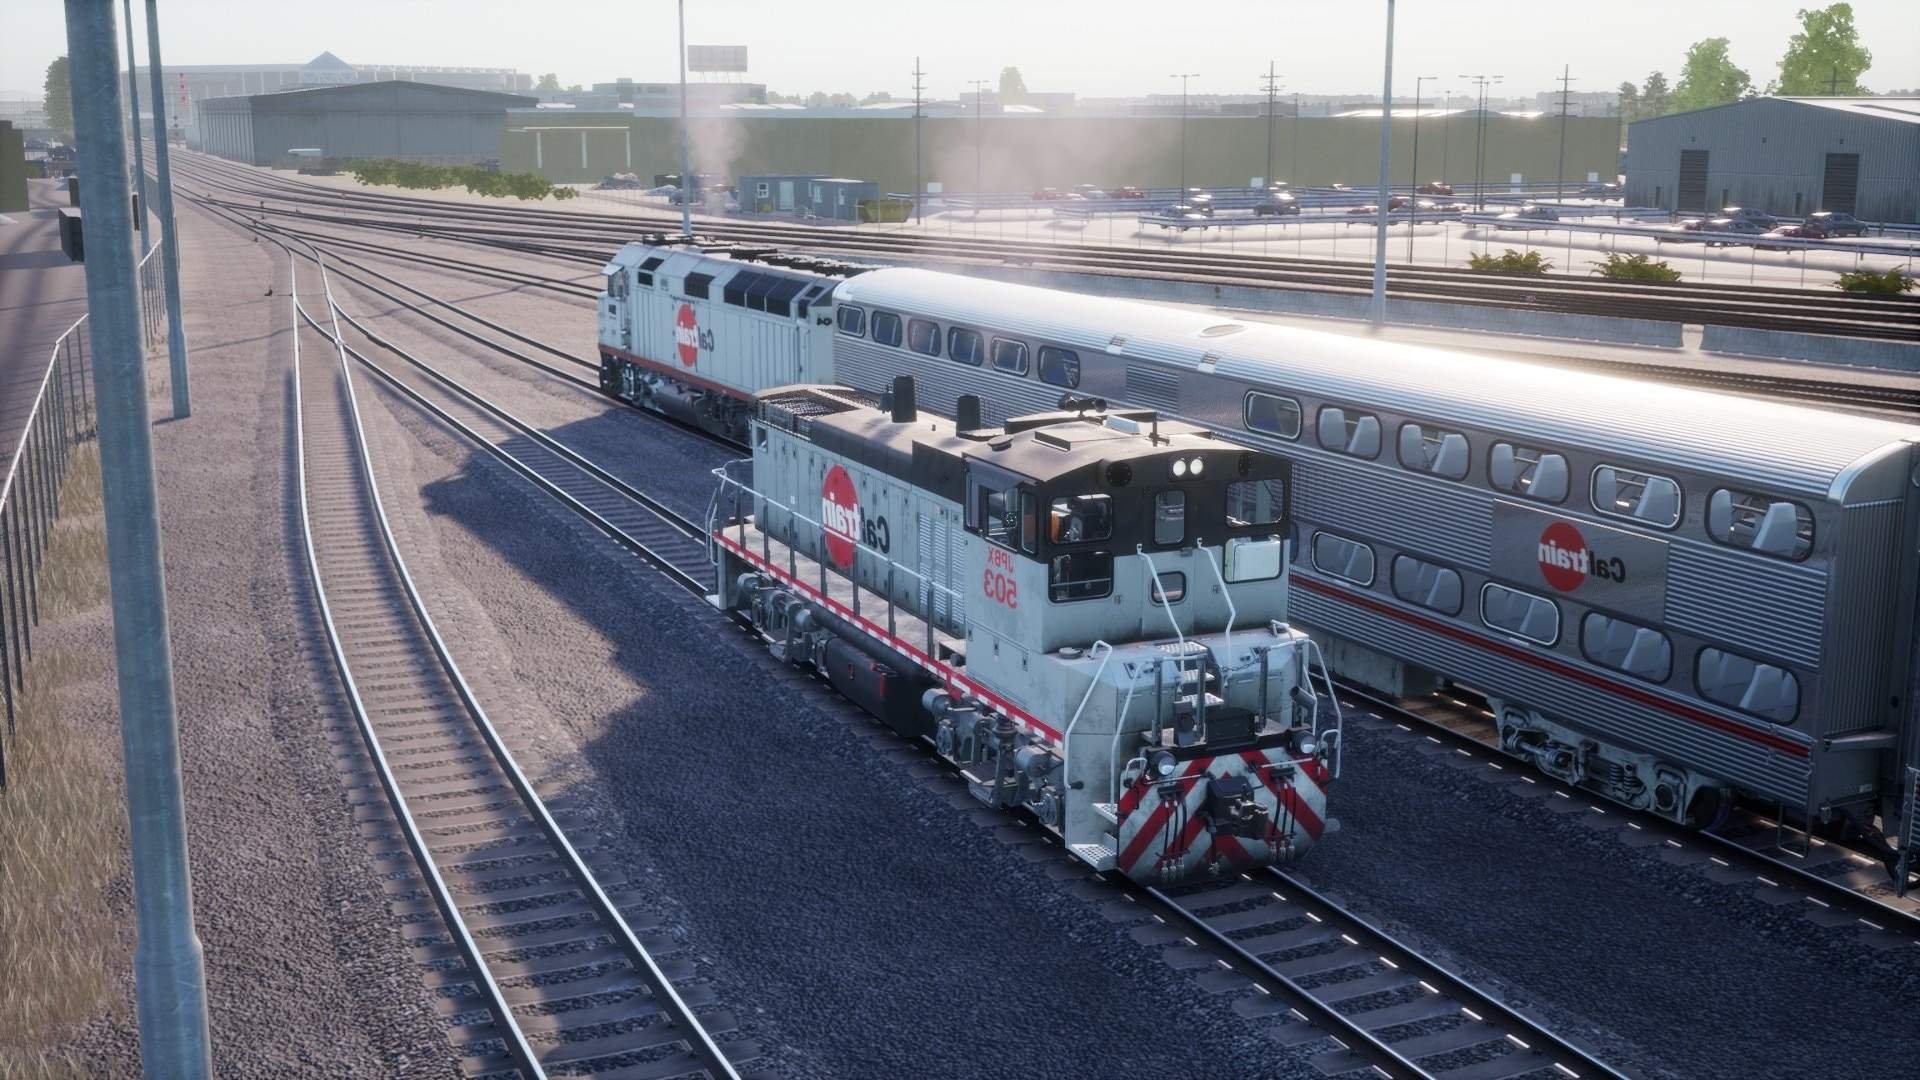 train sim world